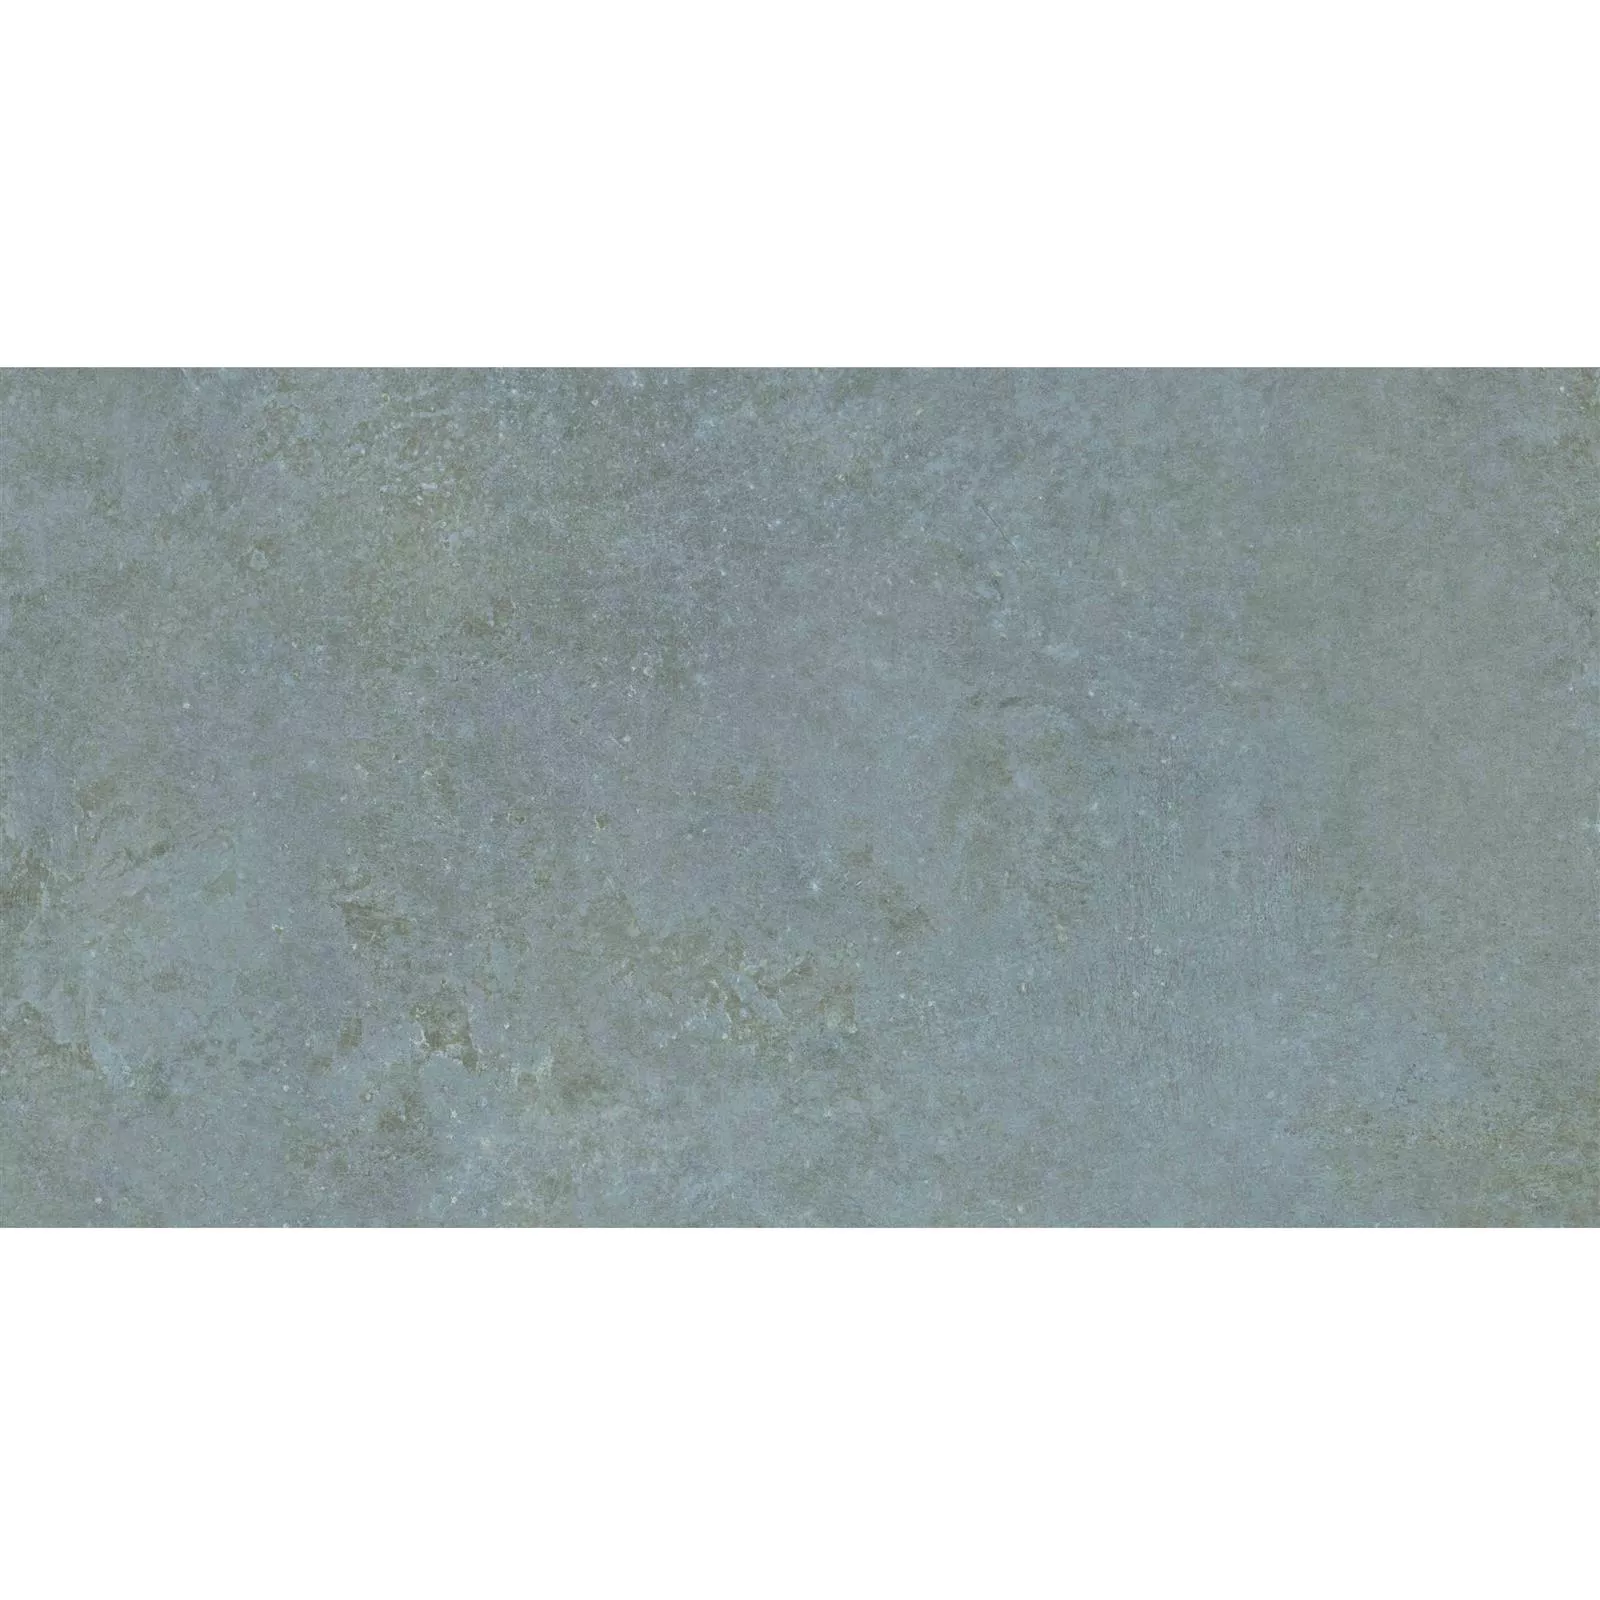 Sample Floor Tiles Peaceway Mint 30x60cm